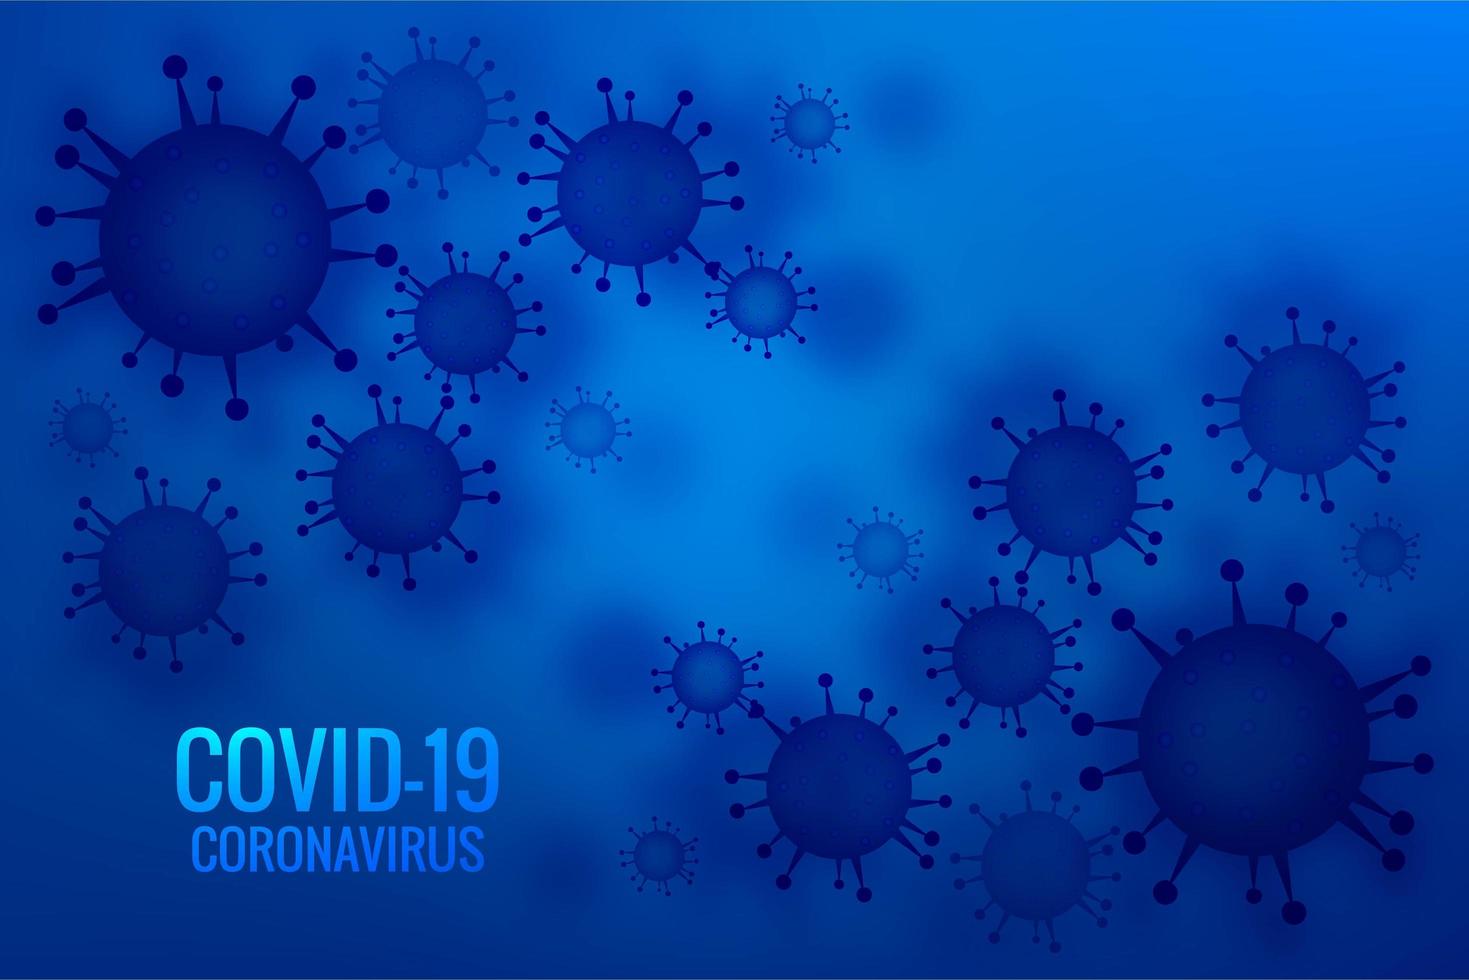 Blue Coronavirus pandemic outbreak design vector